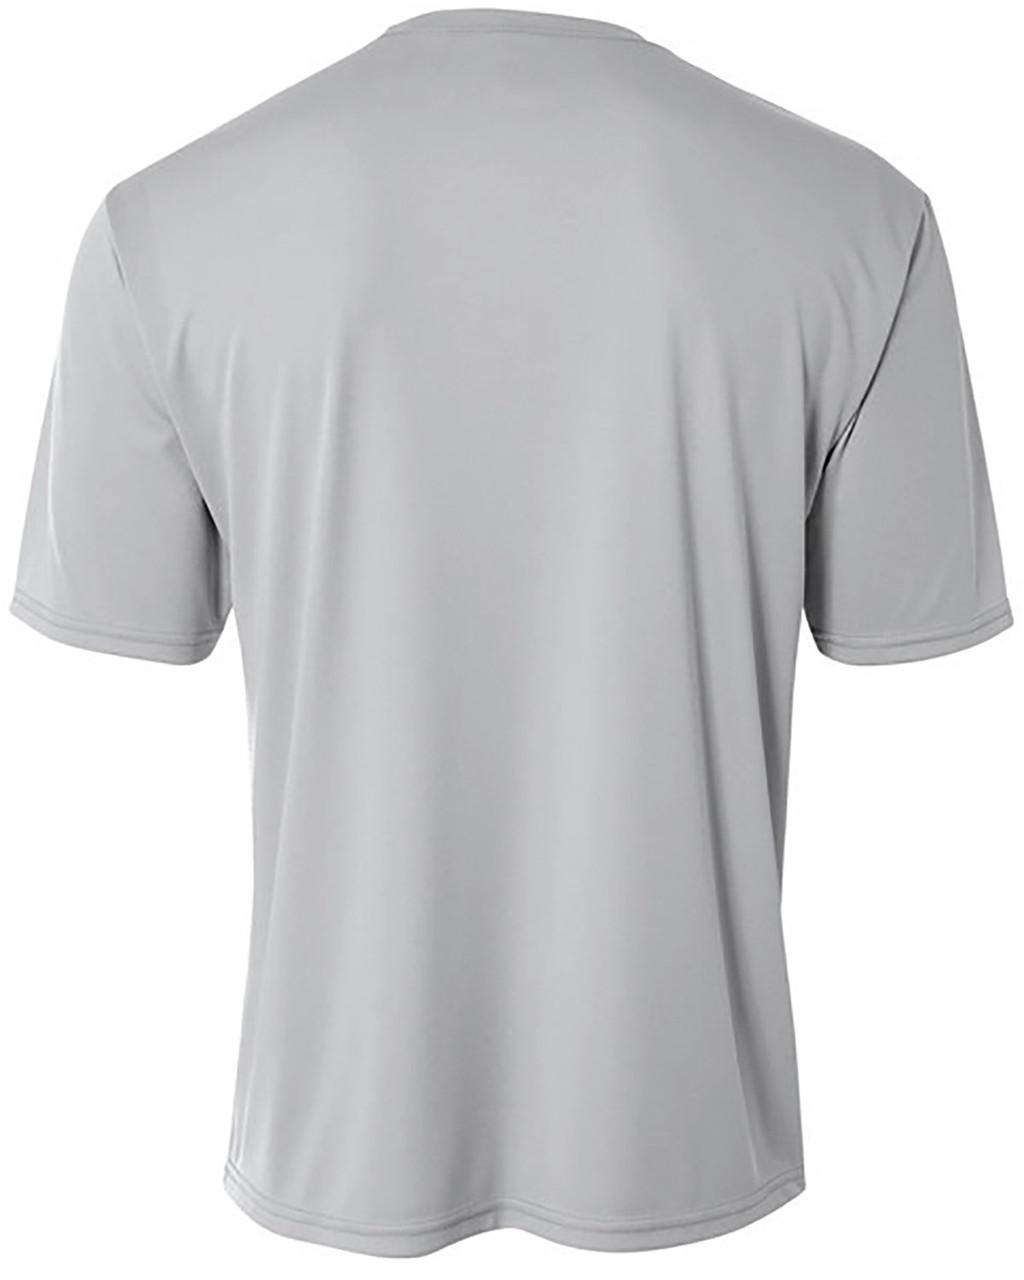 A4 N3402 Men's Sprint Performance T-Shirt - ClothingAuthority.com